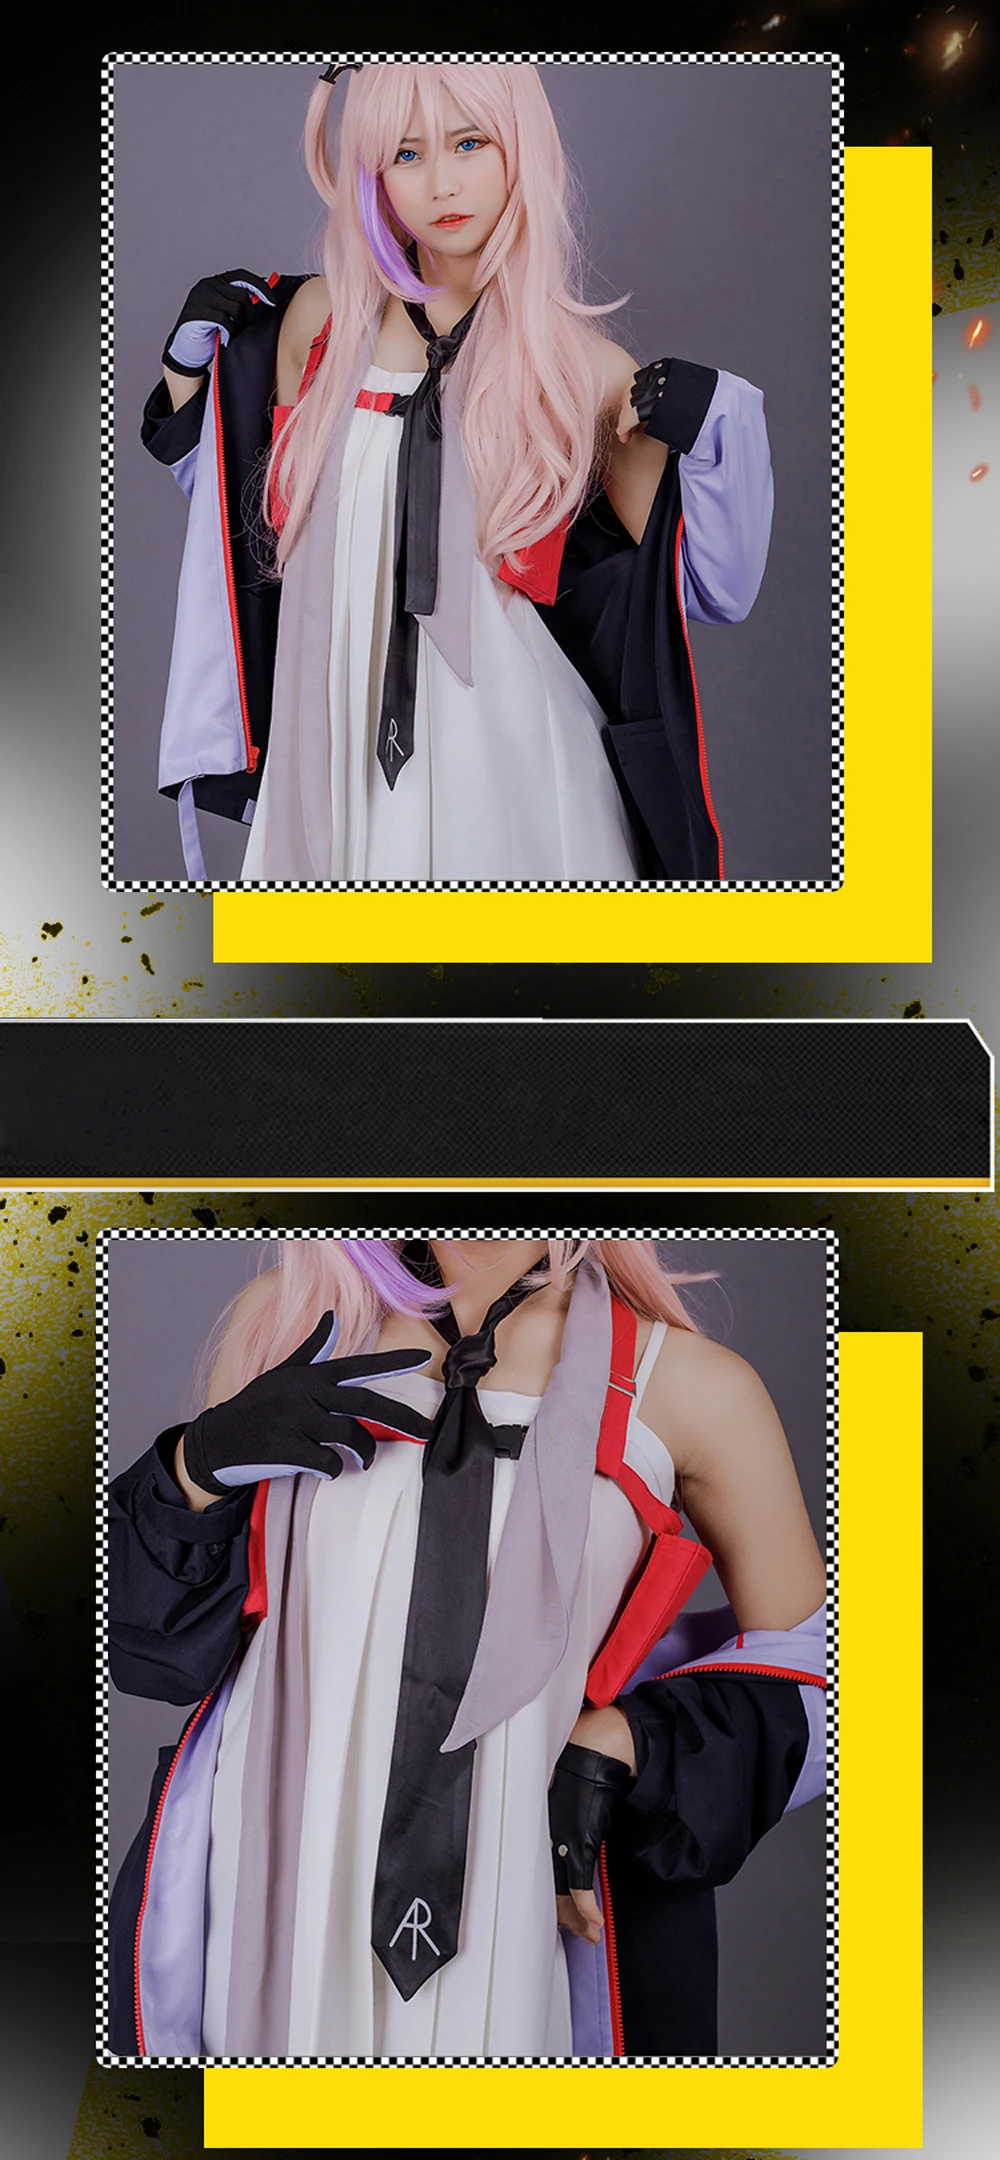 VEVEFHUANG Girls' Frontline cosplay costume ST-AR15 cos fashion coat bag set tie glove uniform clothing for girl women anime set